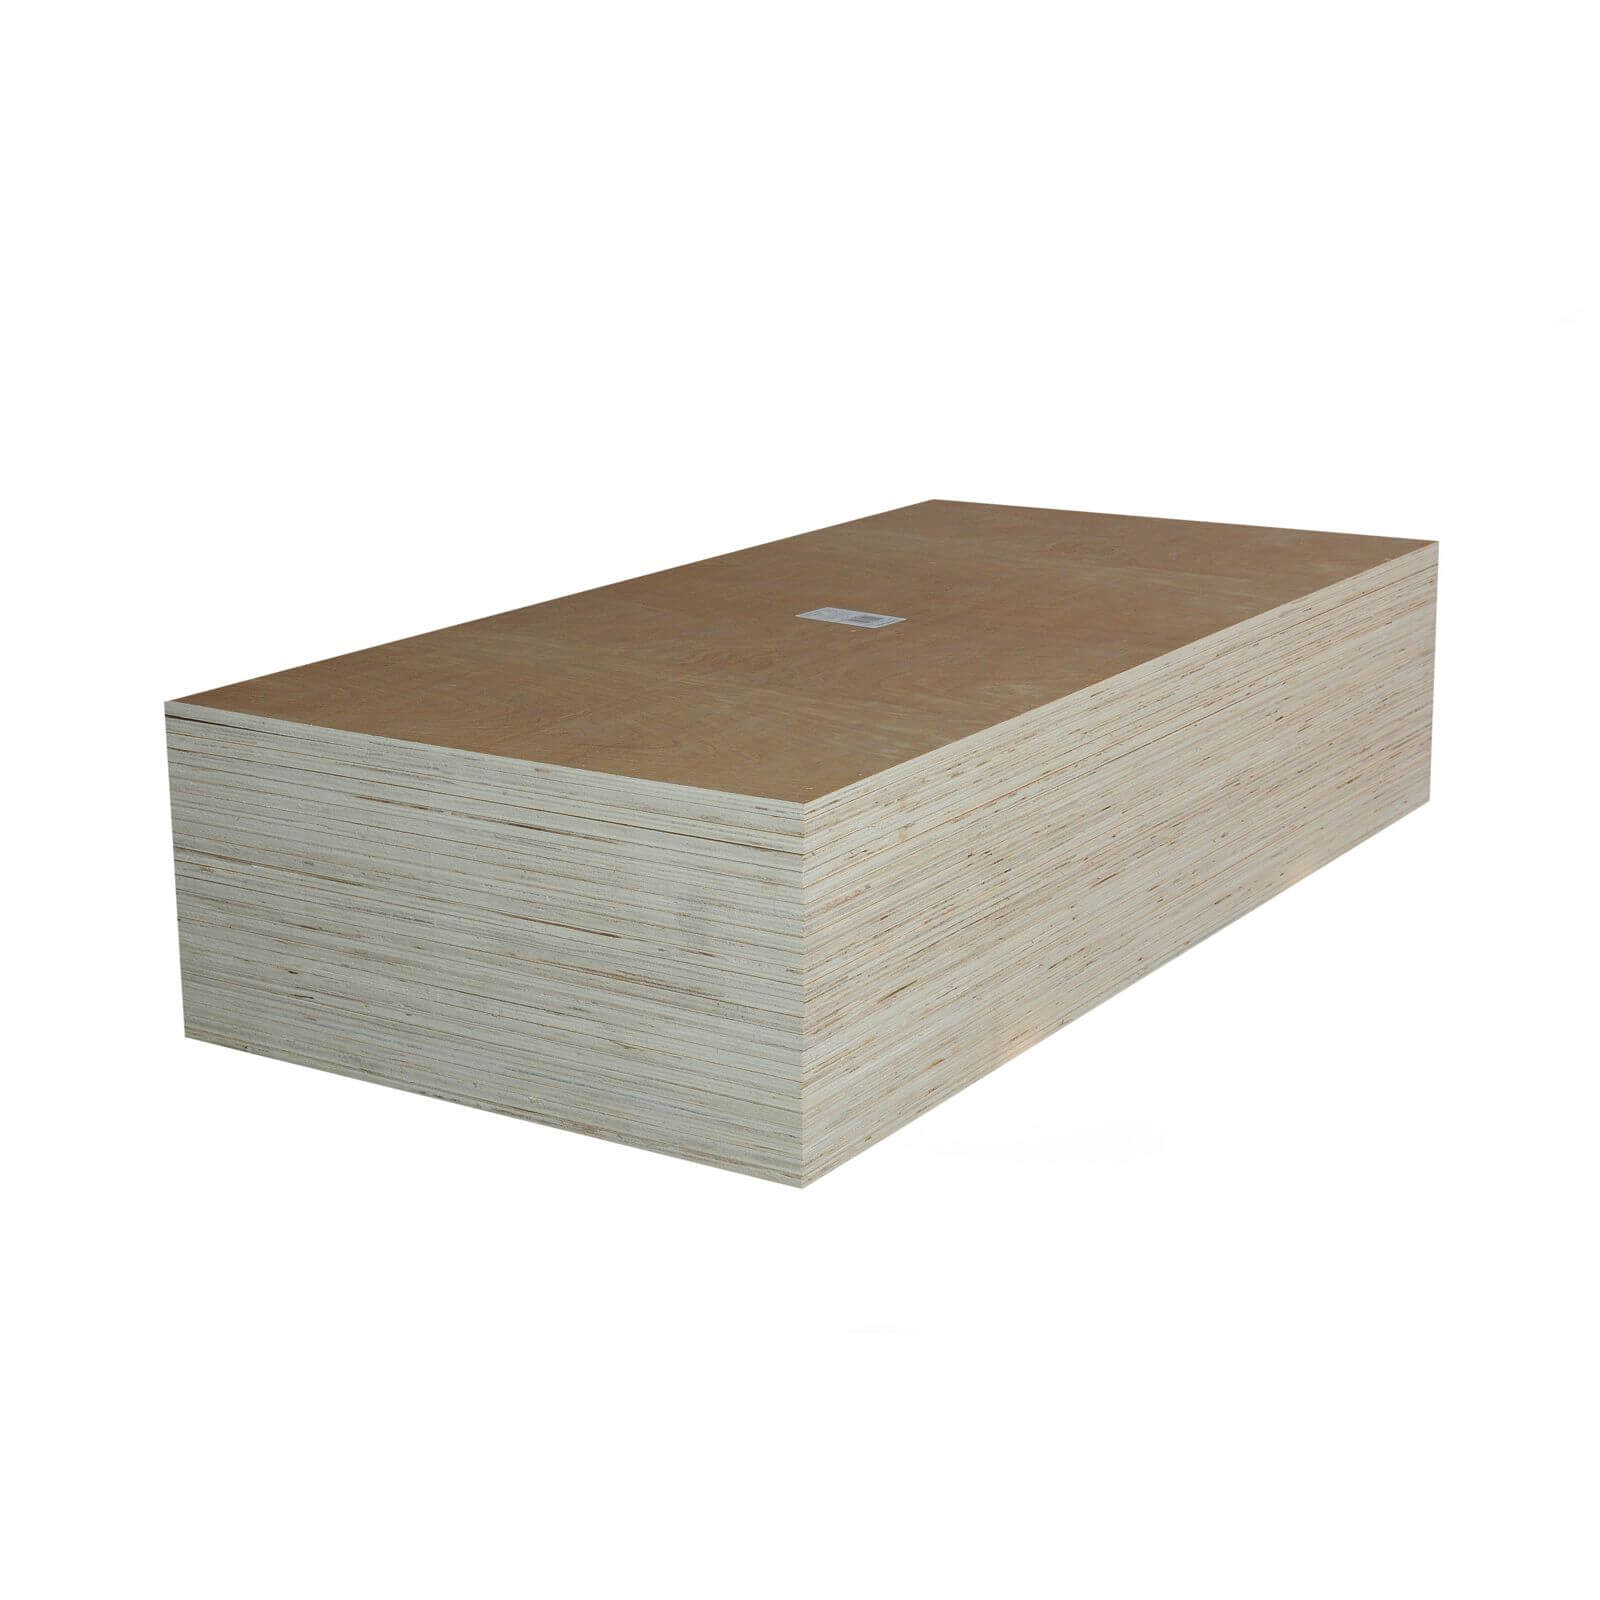 Metsa Hardwood Plywood Board 1.2m (1220 x 607 x 12mm)